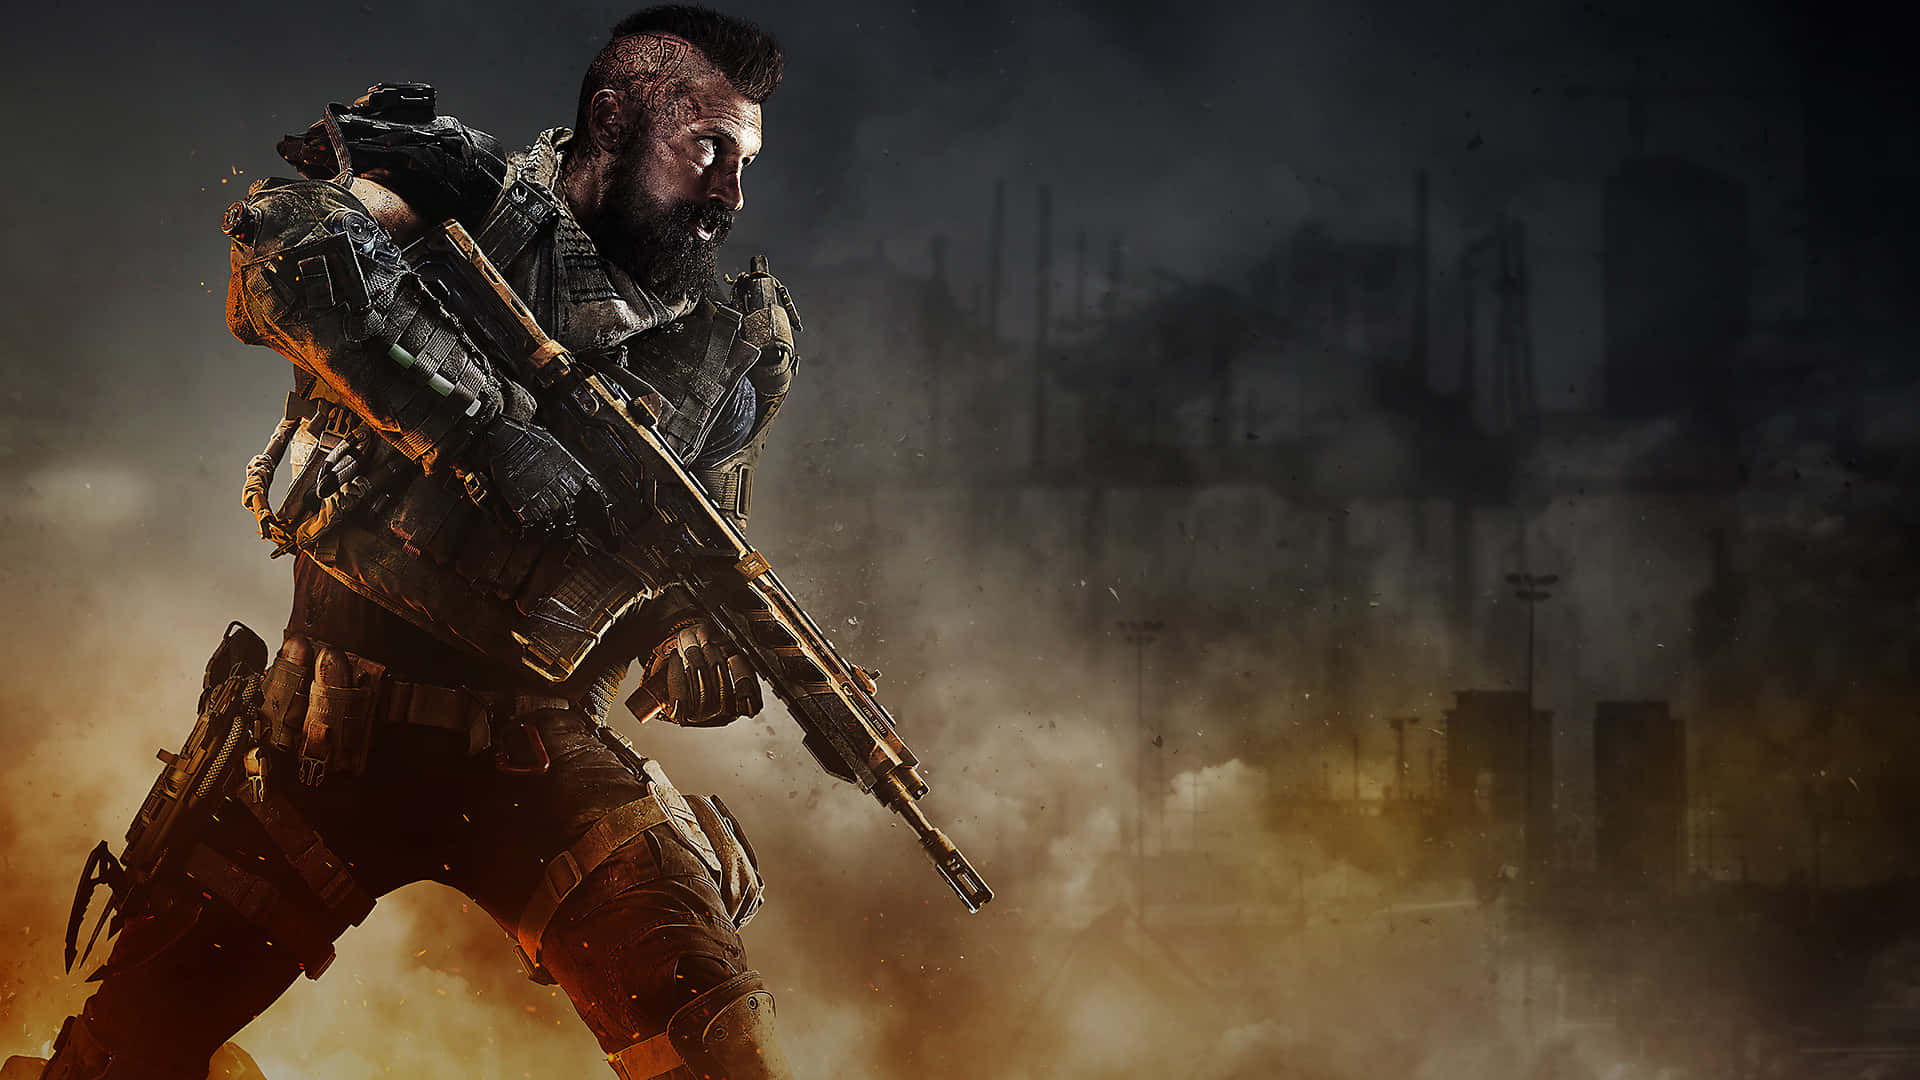 Hintergrundbildvon Call Of Duty Black Ops 4